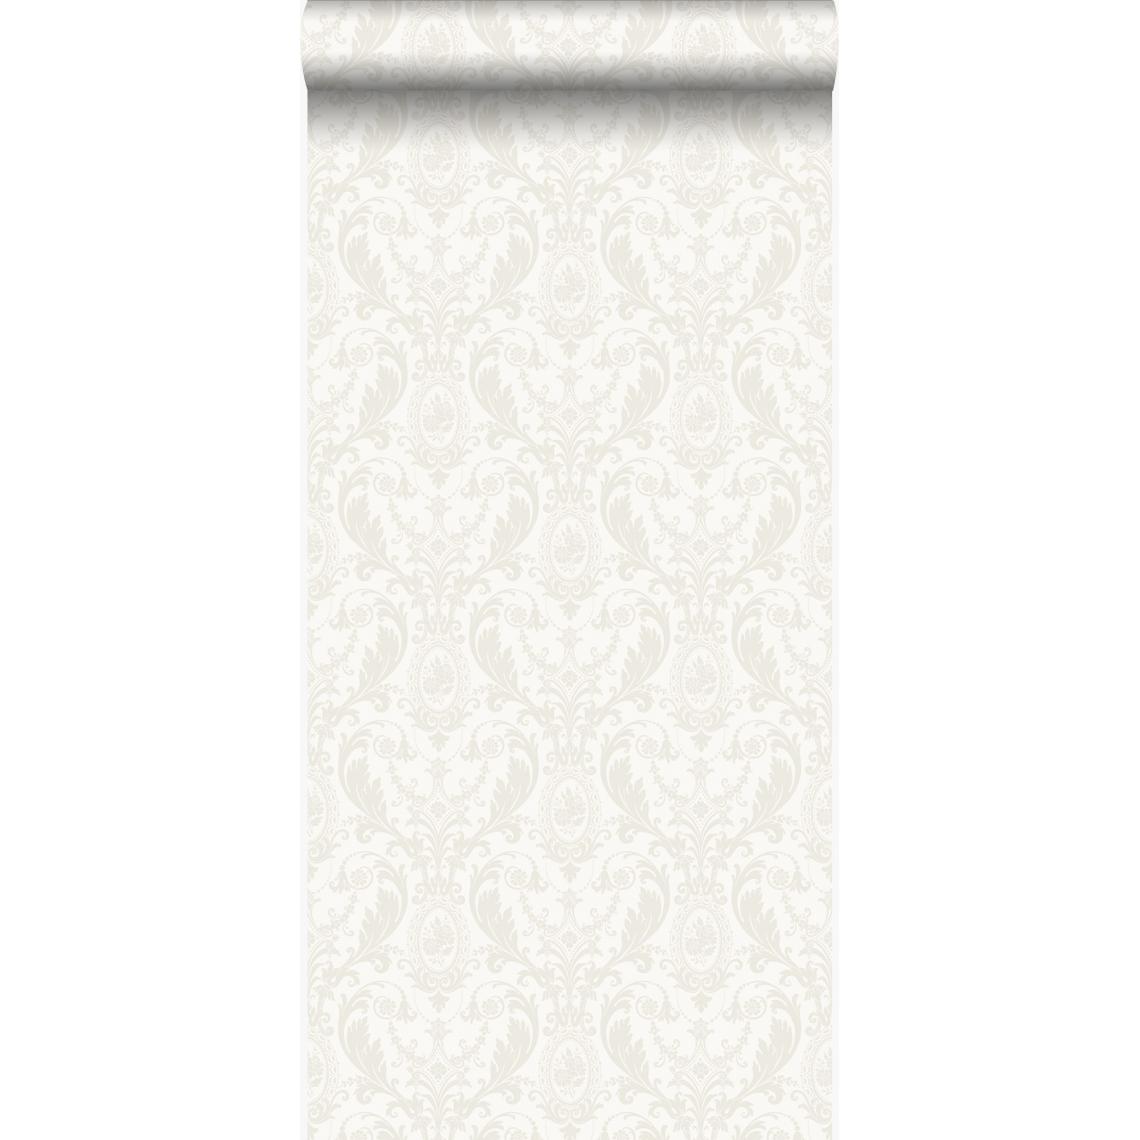 Origin - Origin papier peint ornement blanc - 346214 - 53 cm x 10,05 m - Papier peint